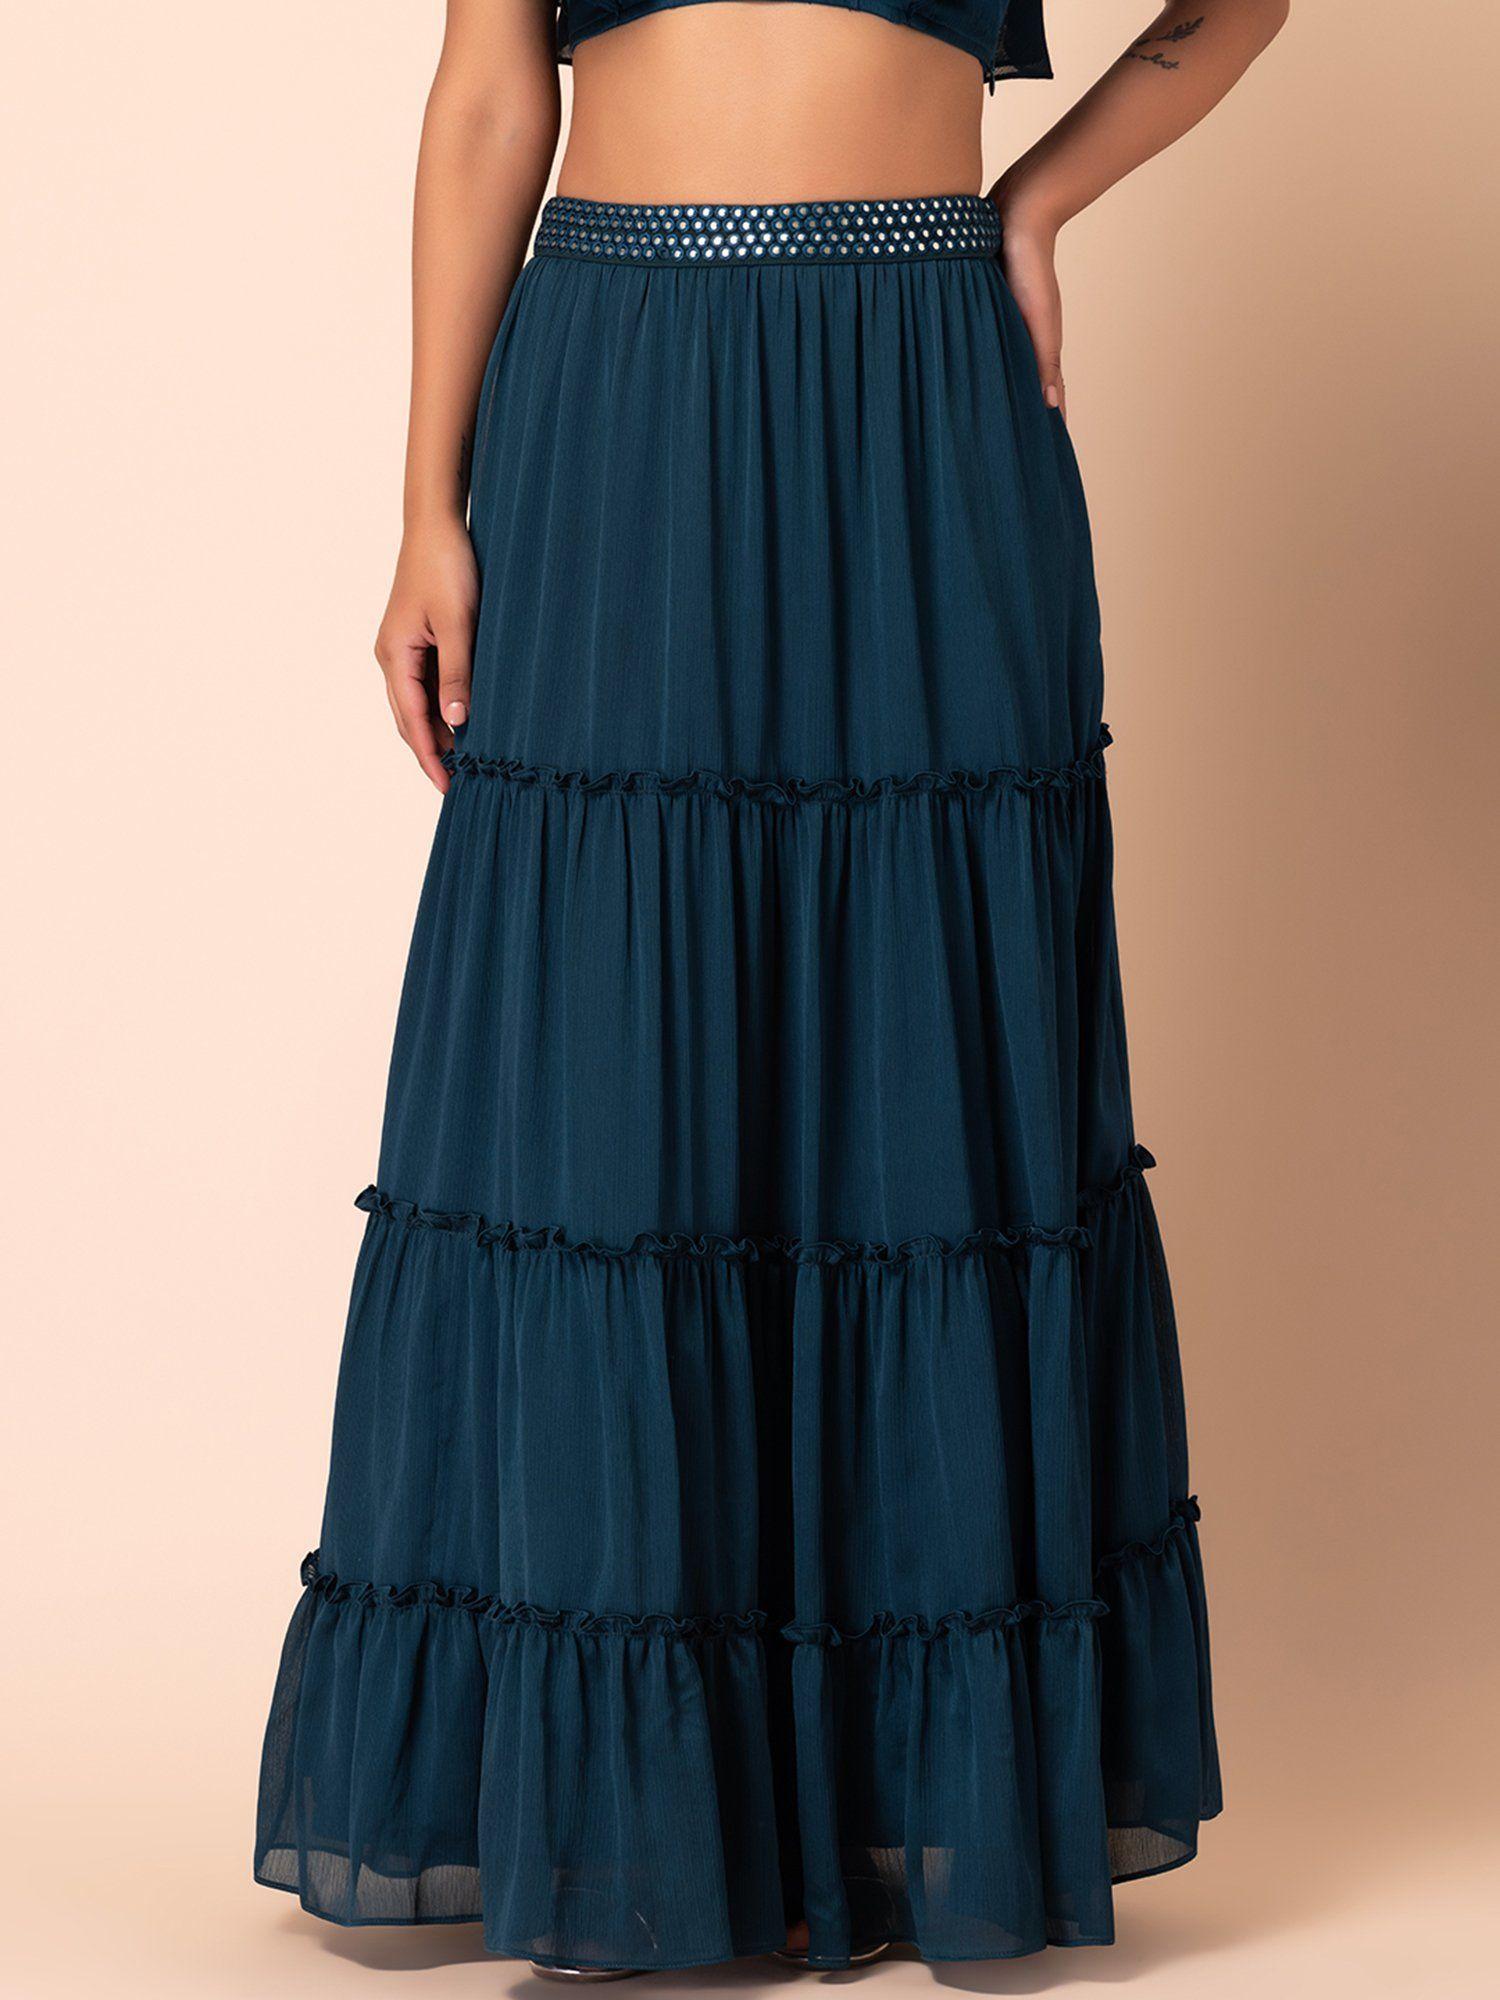 teal blue mirror embroidered tiered lehenga skirt